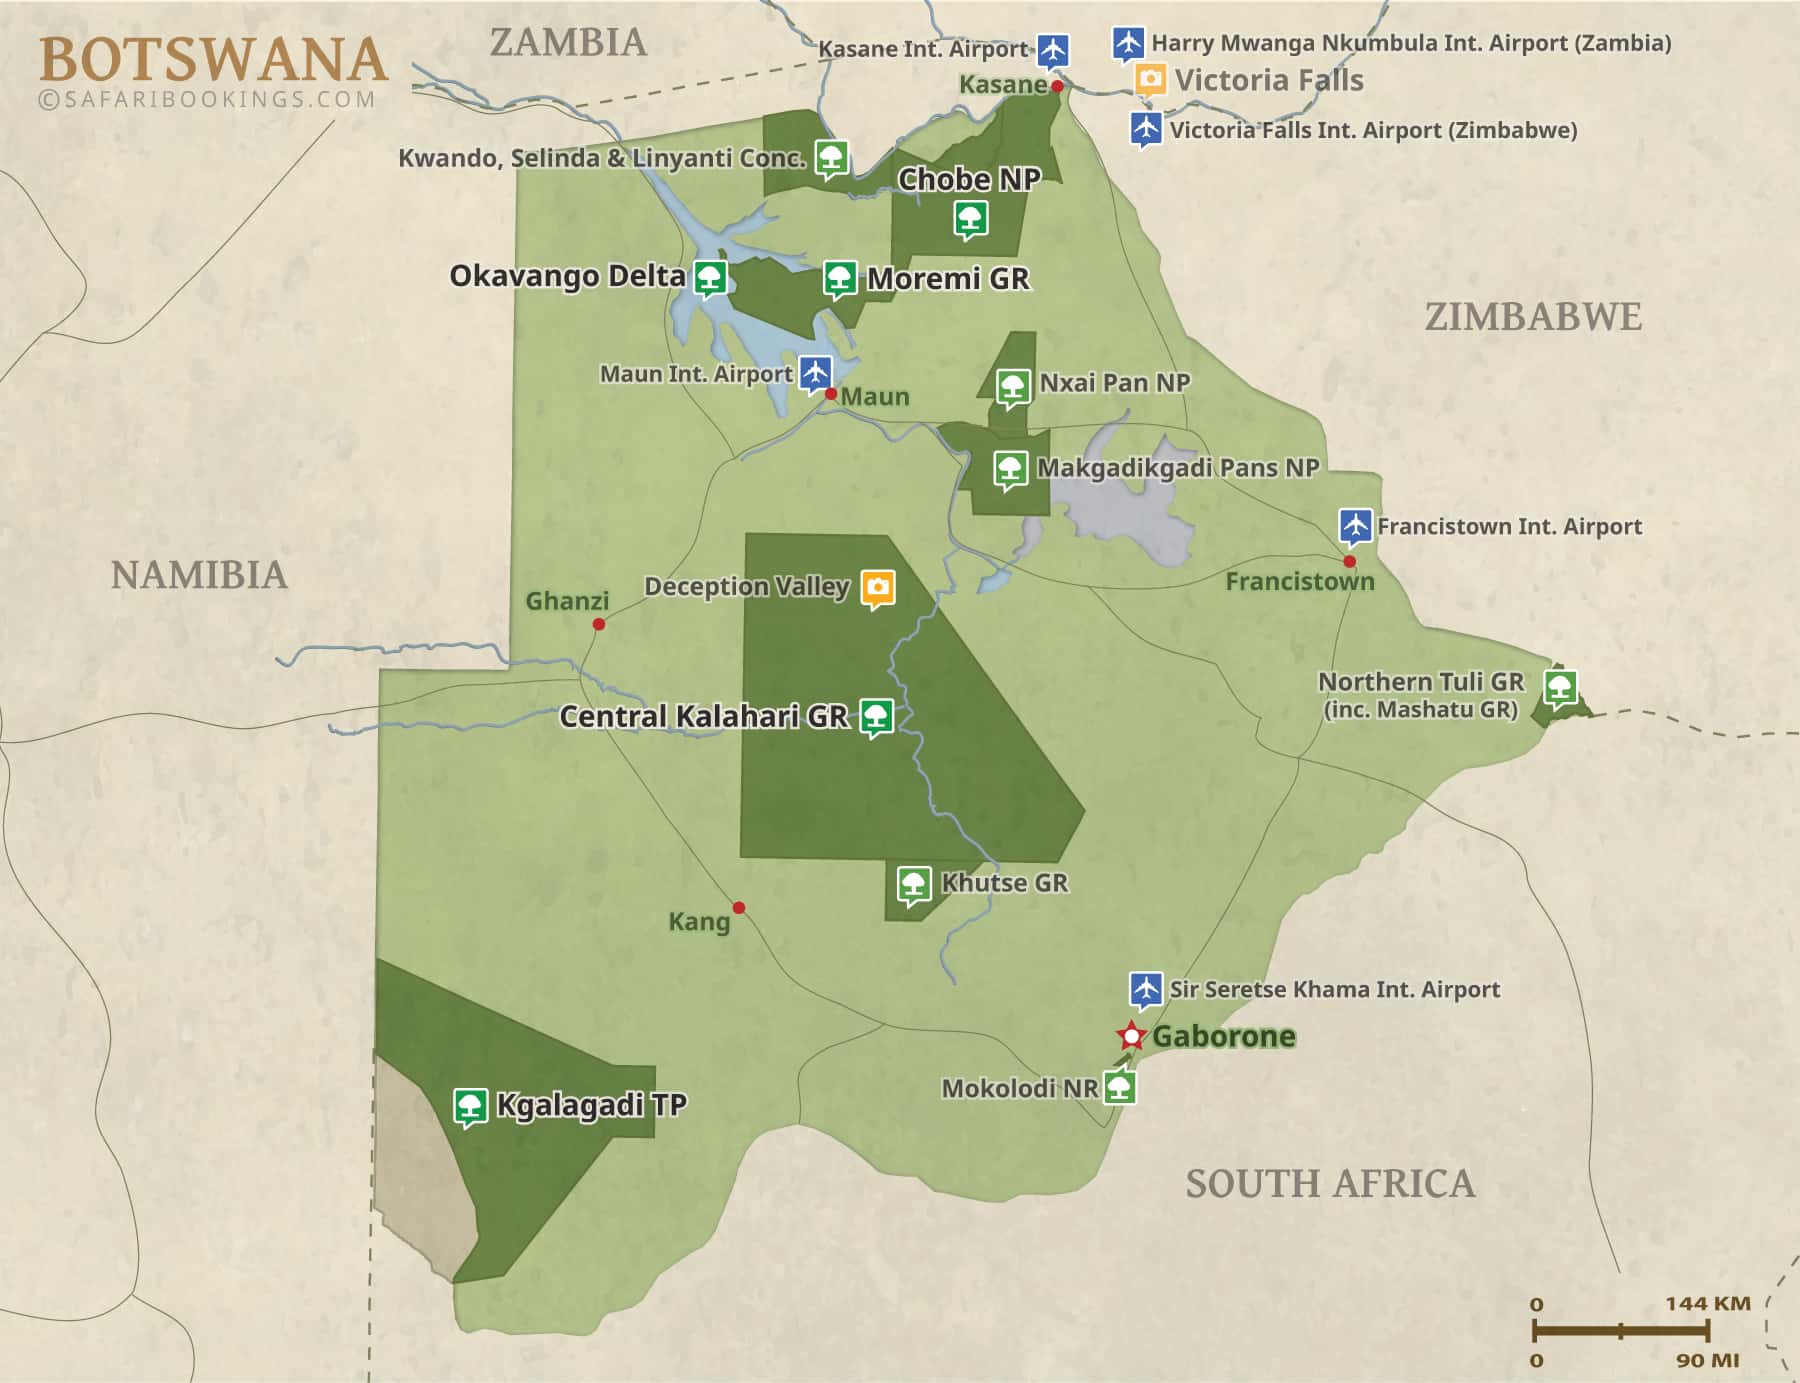 Popular Routes in Botswana